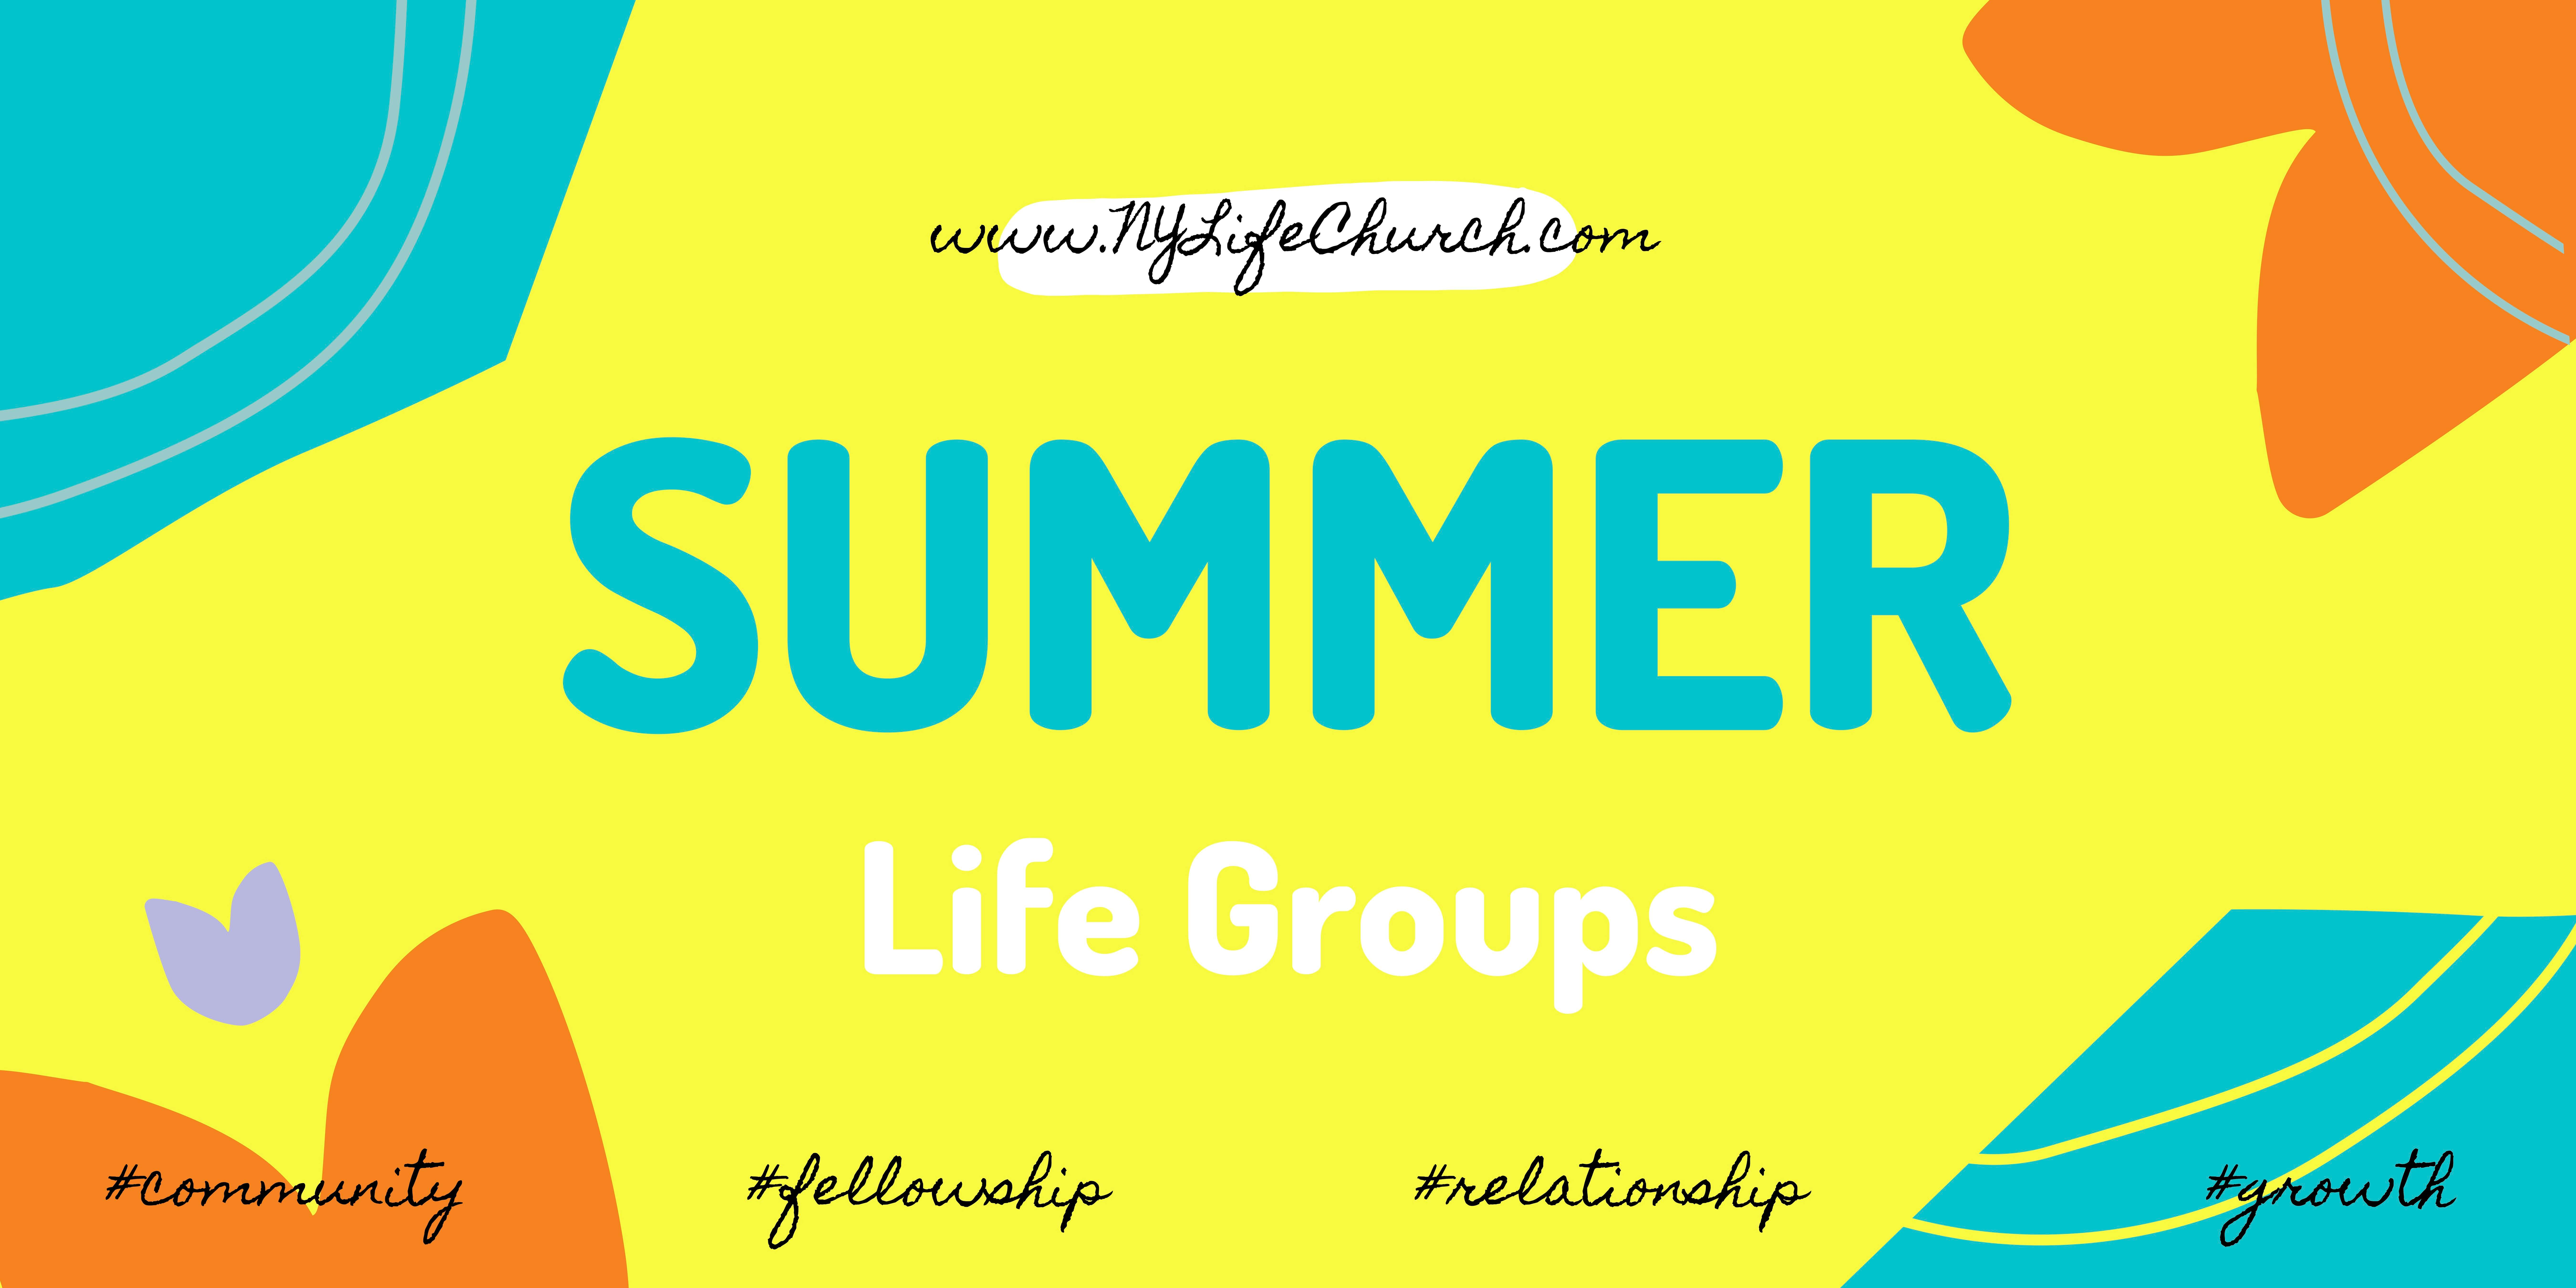 Life Groups